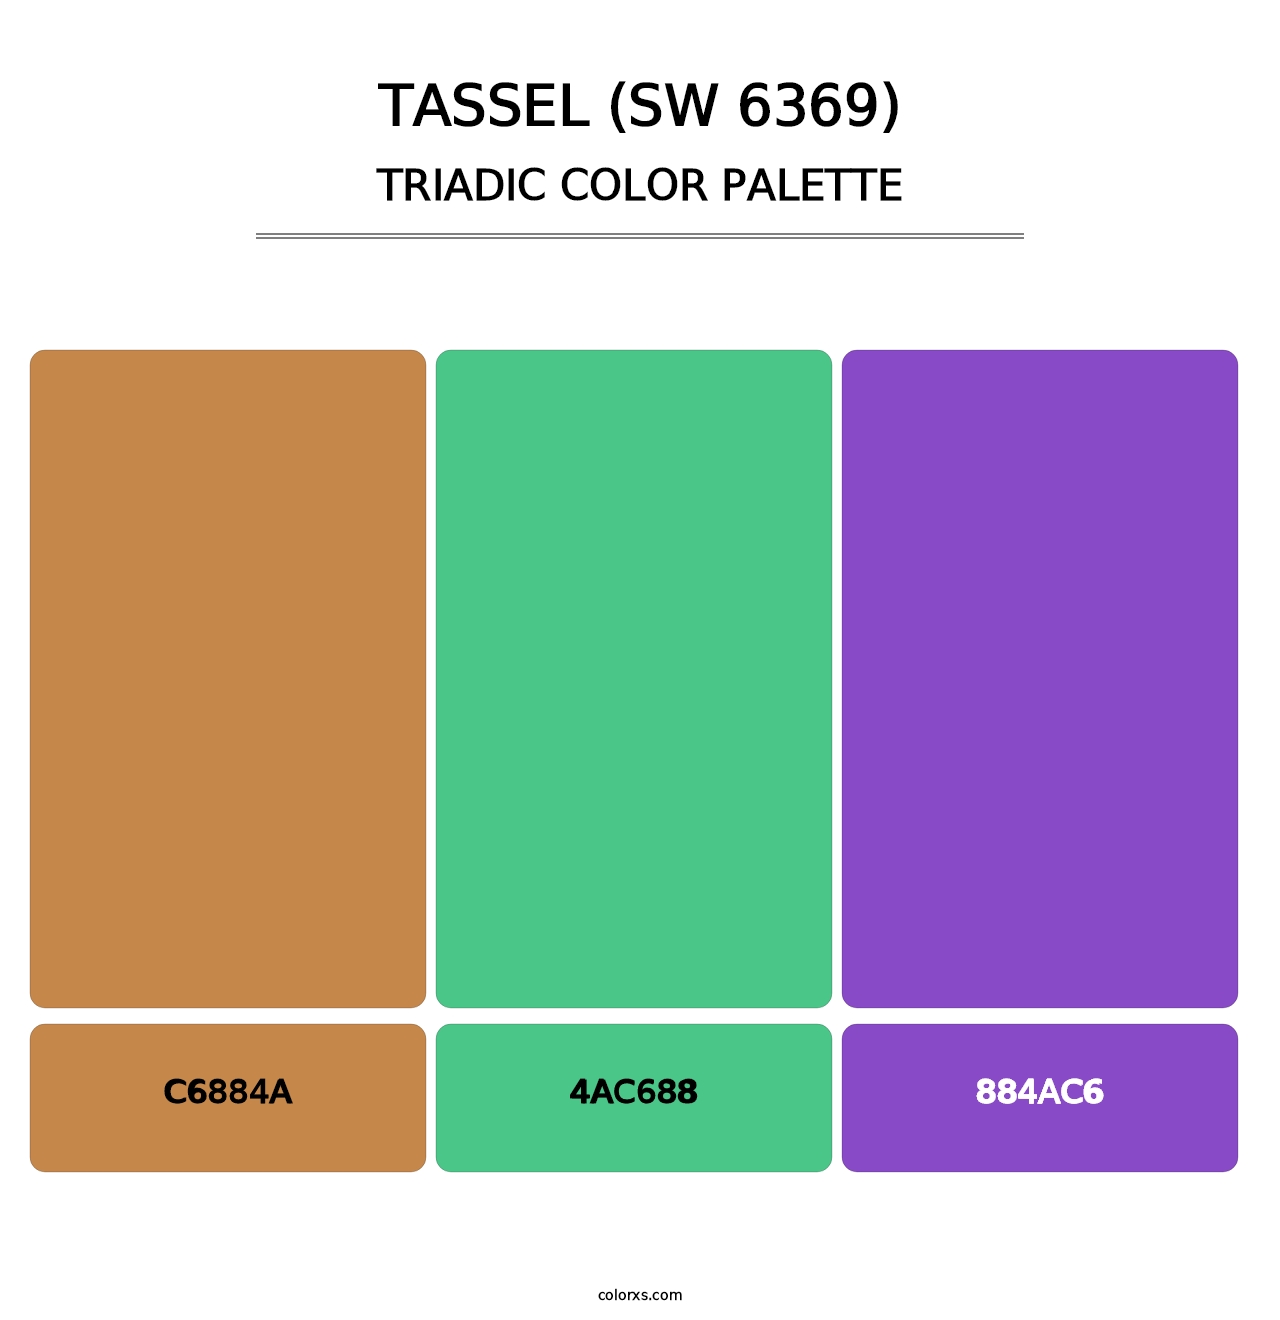 Tassel (SW 6369) - Triadic Color Palette